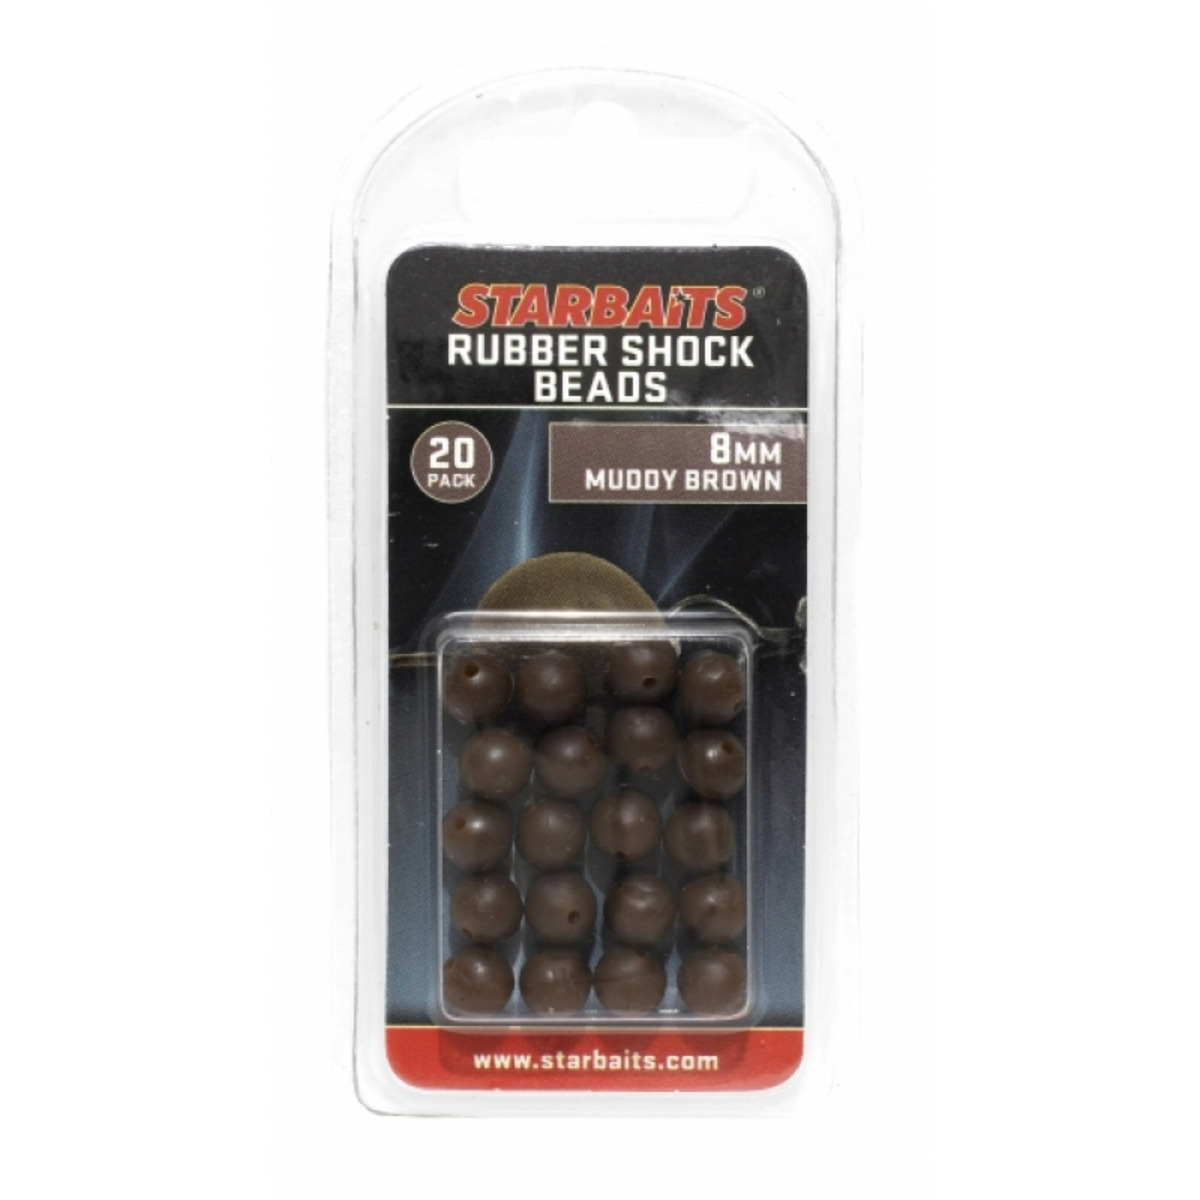 Starbaits Rubber Schock Beads 8mm - Muddy Brown